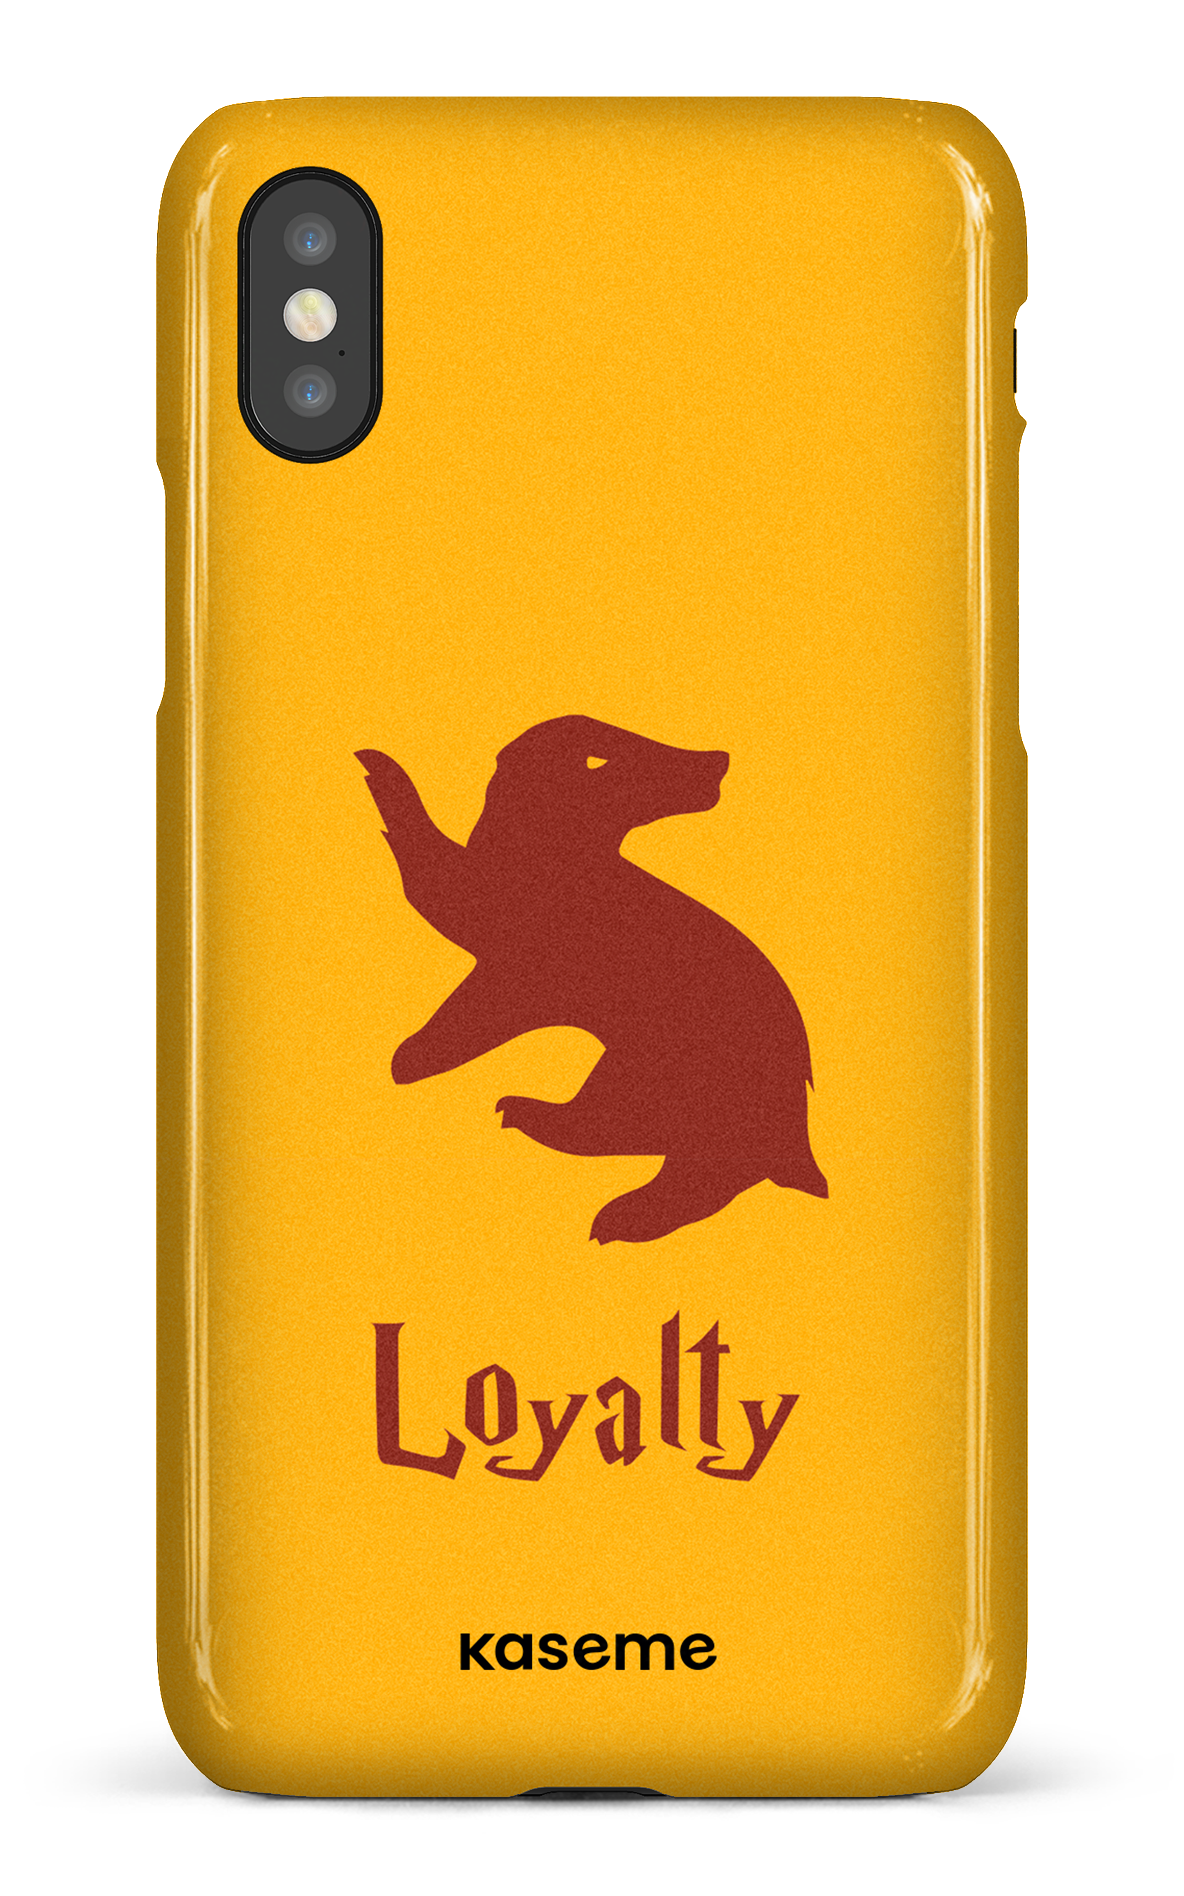 Loyalty - iPhone X/XS